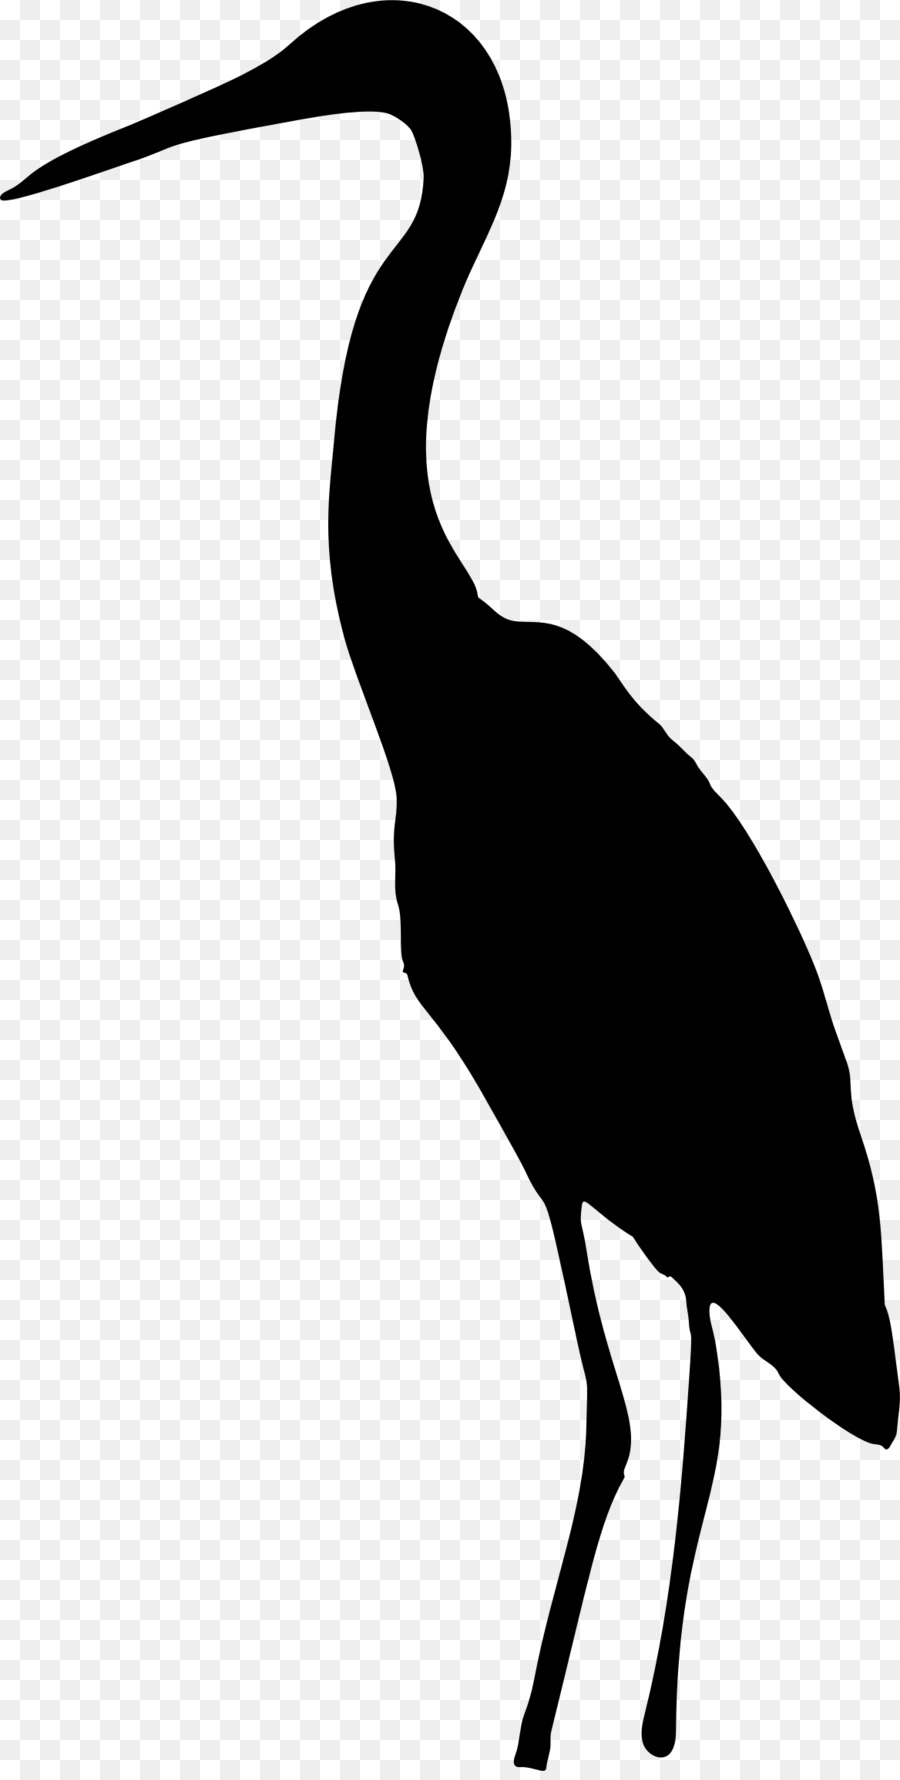 Great blue heron Bird Animal Silhouettes - Bird png download - 1168*2298 - Free Transparent Heron png Download.